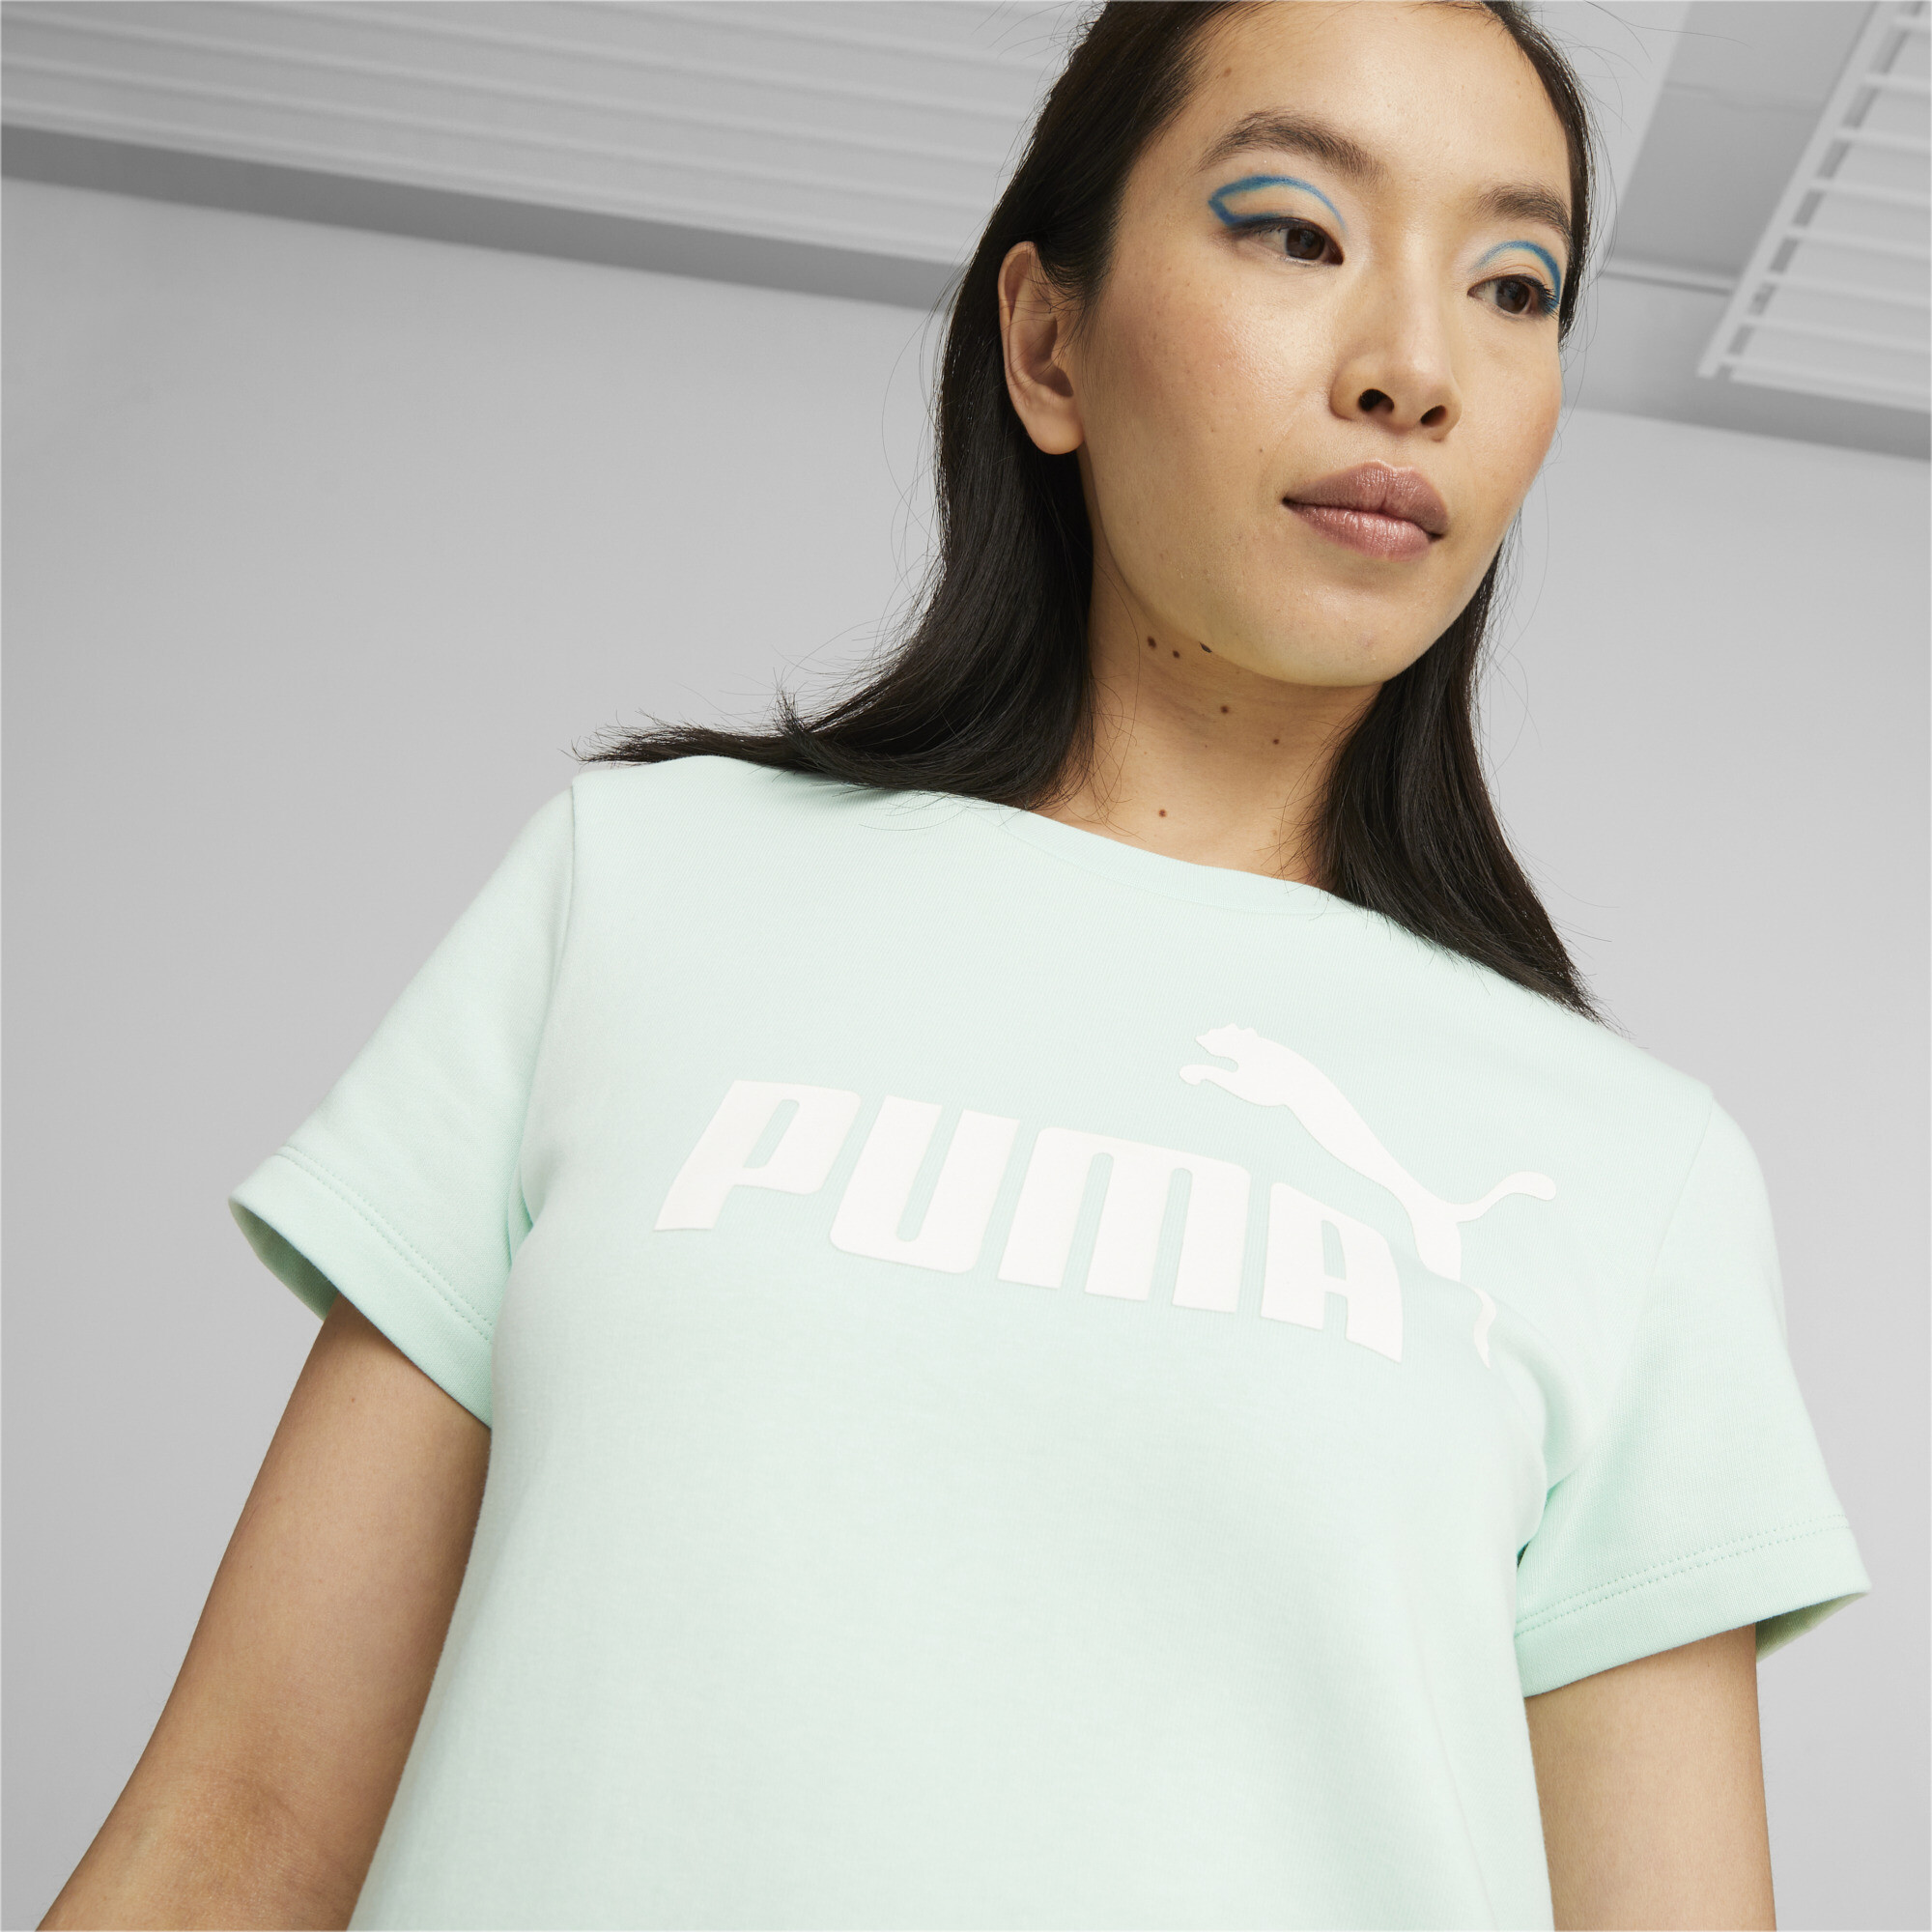 Women's Puma Essentials Logo Dress, Green, Size S, Clothing